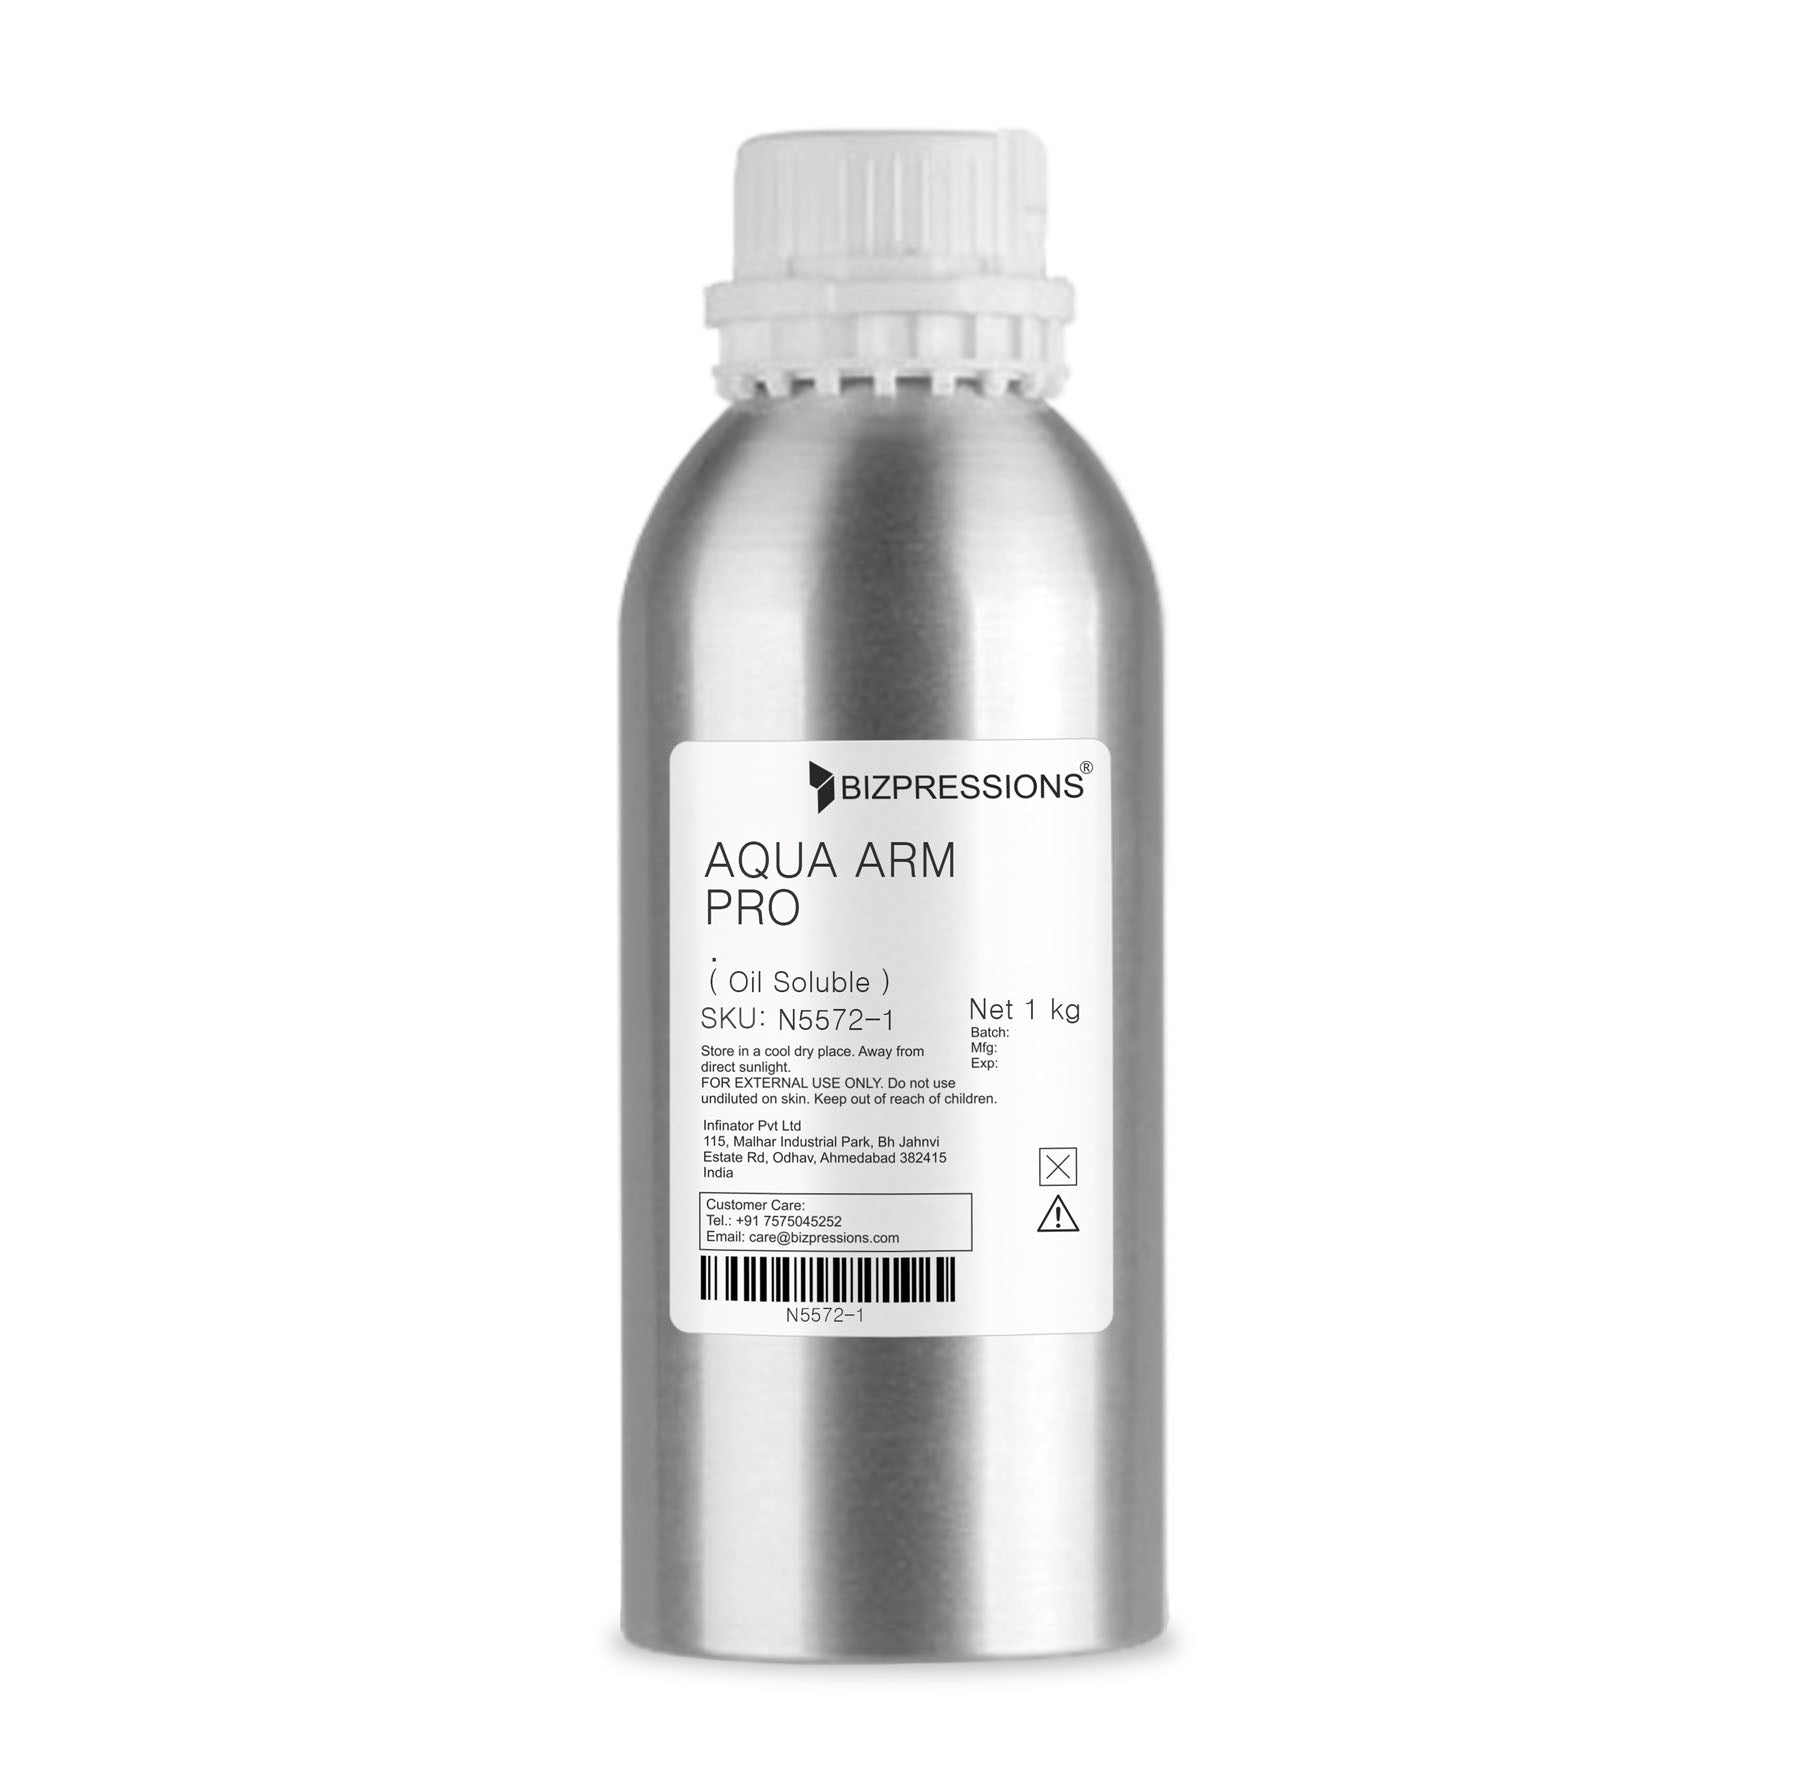 AQUA ARM PRO - Fragrance ( Oil Soluble ) - 1 kg